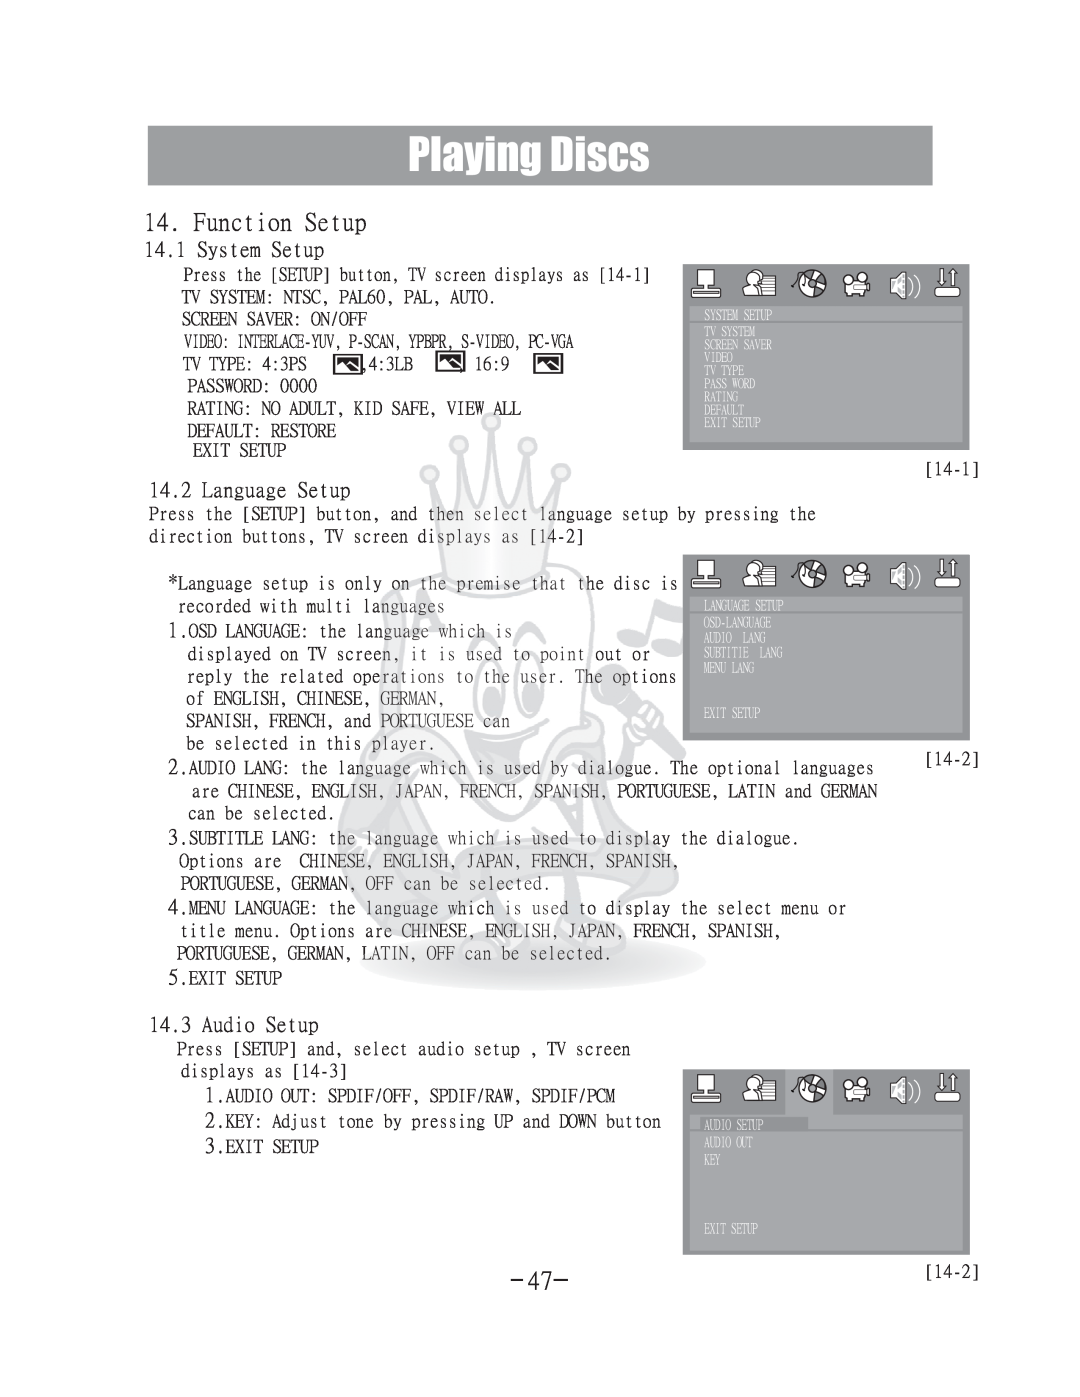 Acesonic DGX-400 user manual Function Setup, Playing Discs, System Setup, Language Setup, Audio Setup 